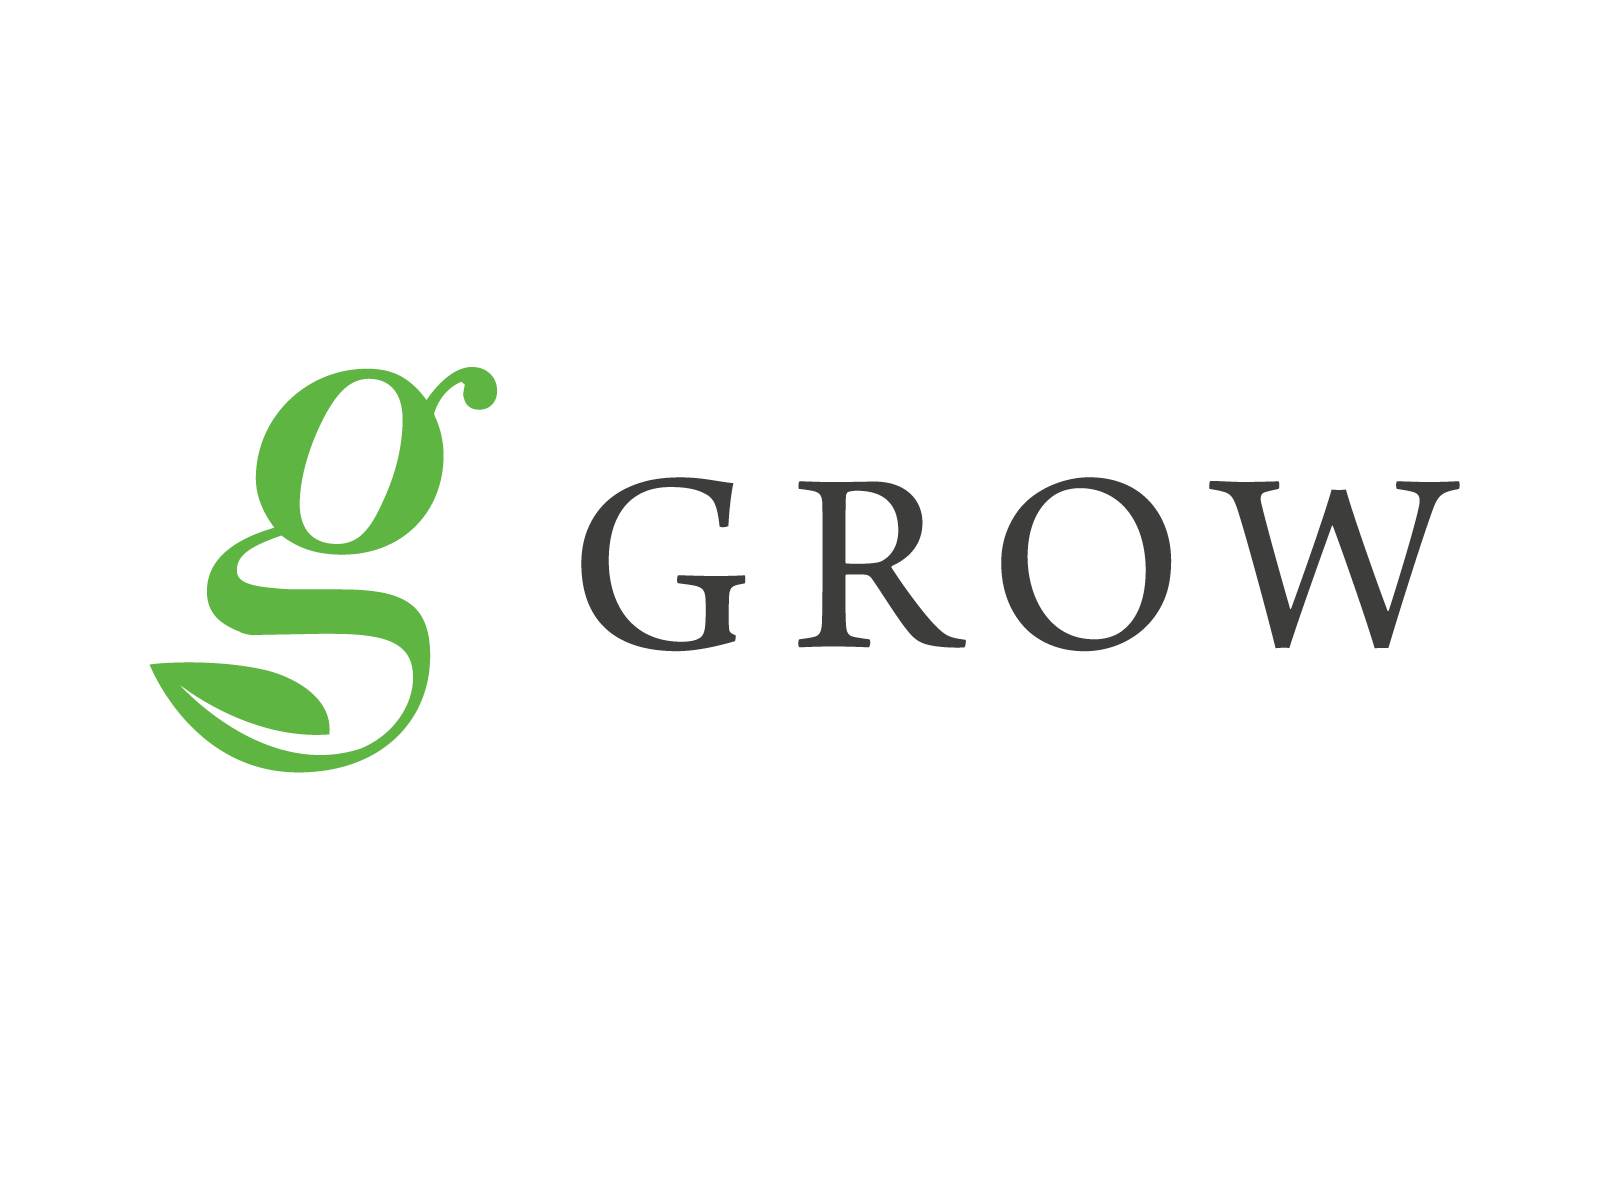 G Grow Network Logo - Alphabet Logos 20/26 by Jacob Cass on Dribbble